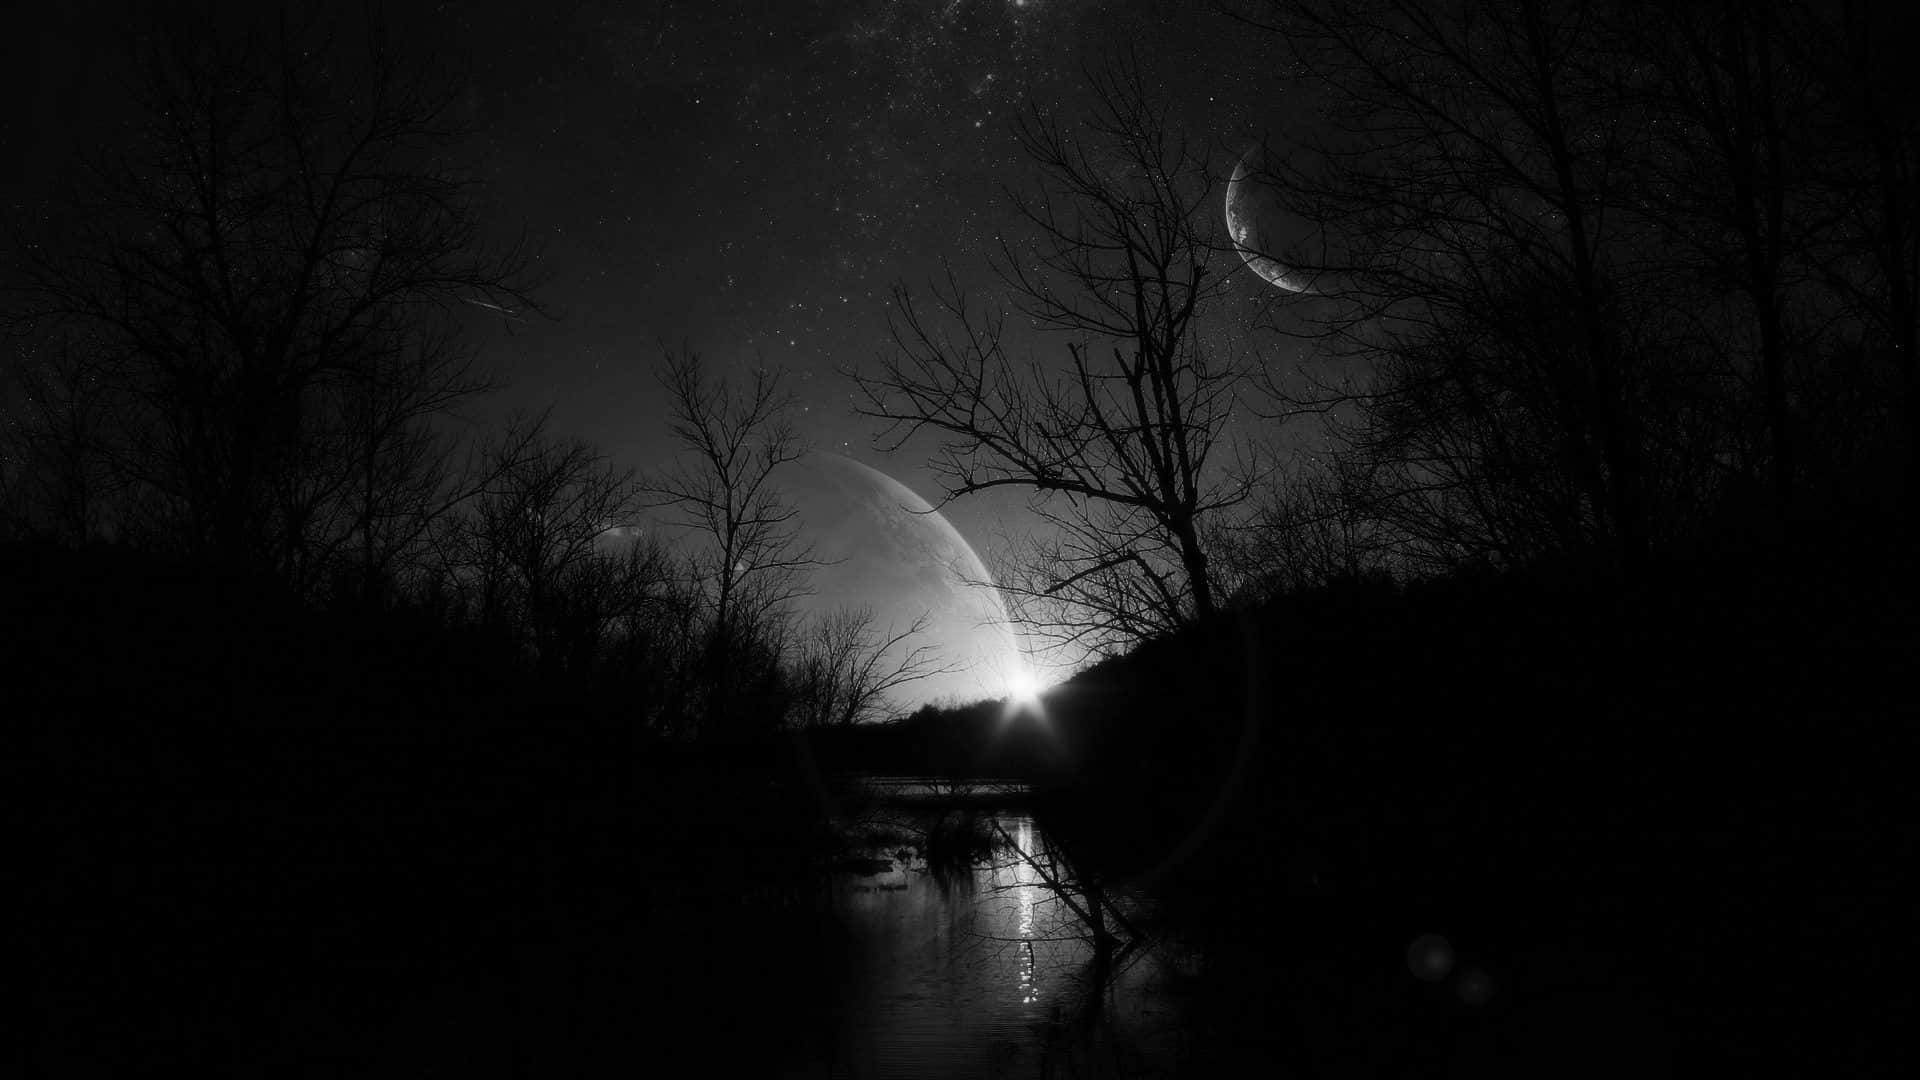 Dark Depressing River In The Night Background